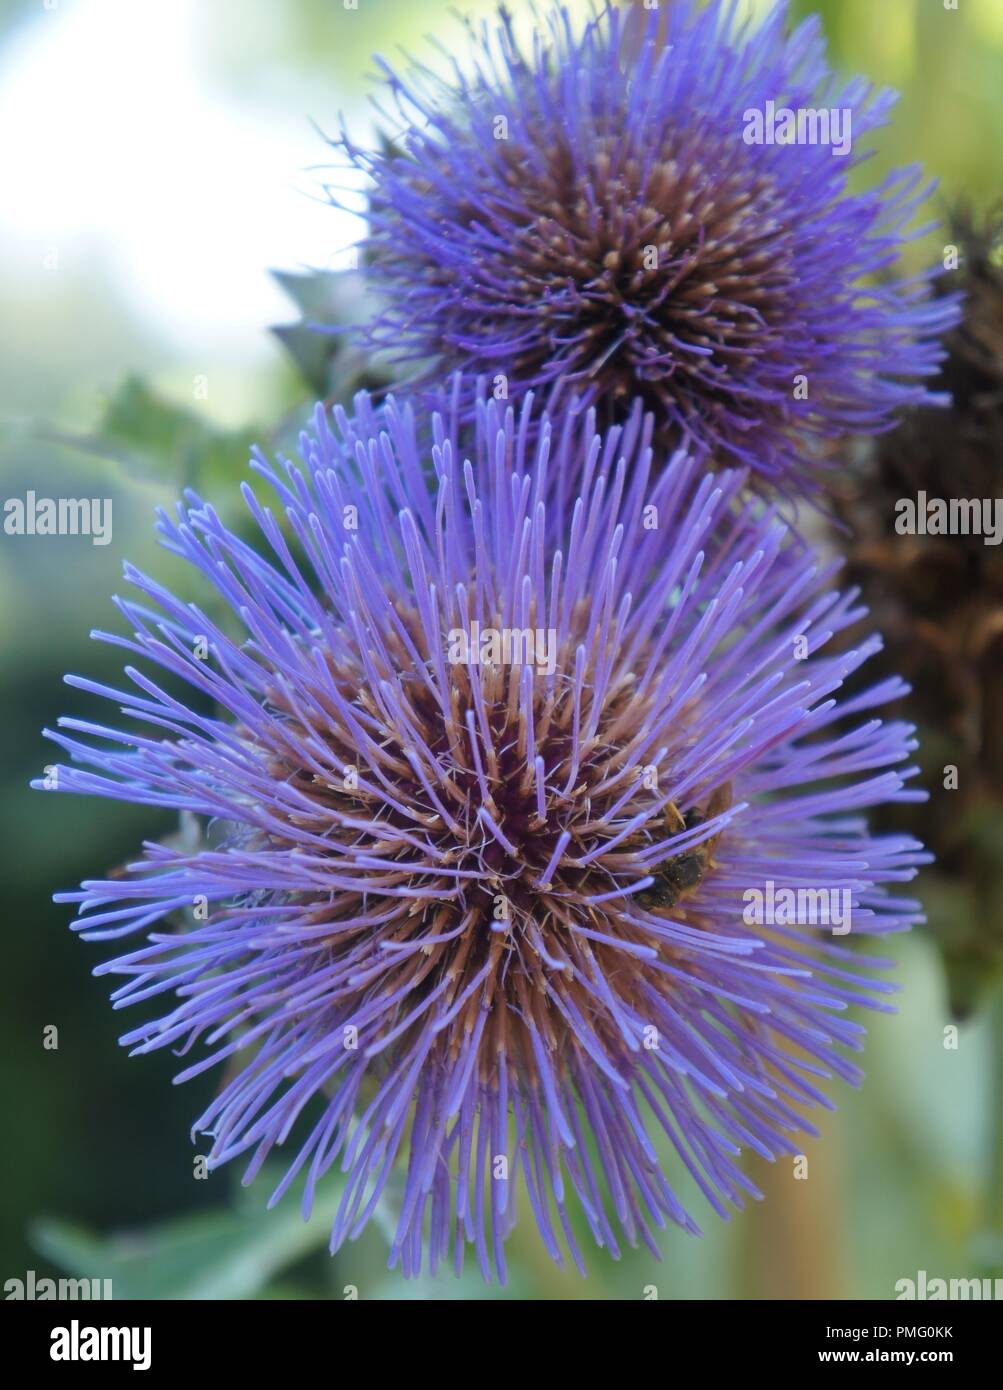 Fleur de cardon bleue, plante potagère famille des cardons et artichauts Cynara cardunculus, cardo Blu fiore, ortaggio famiglia di cardi Foto Stock